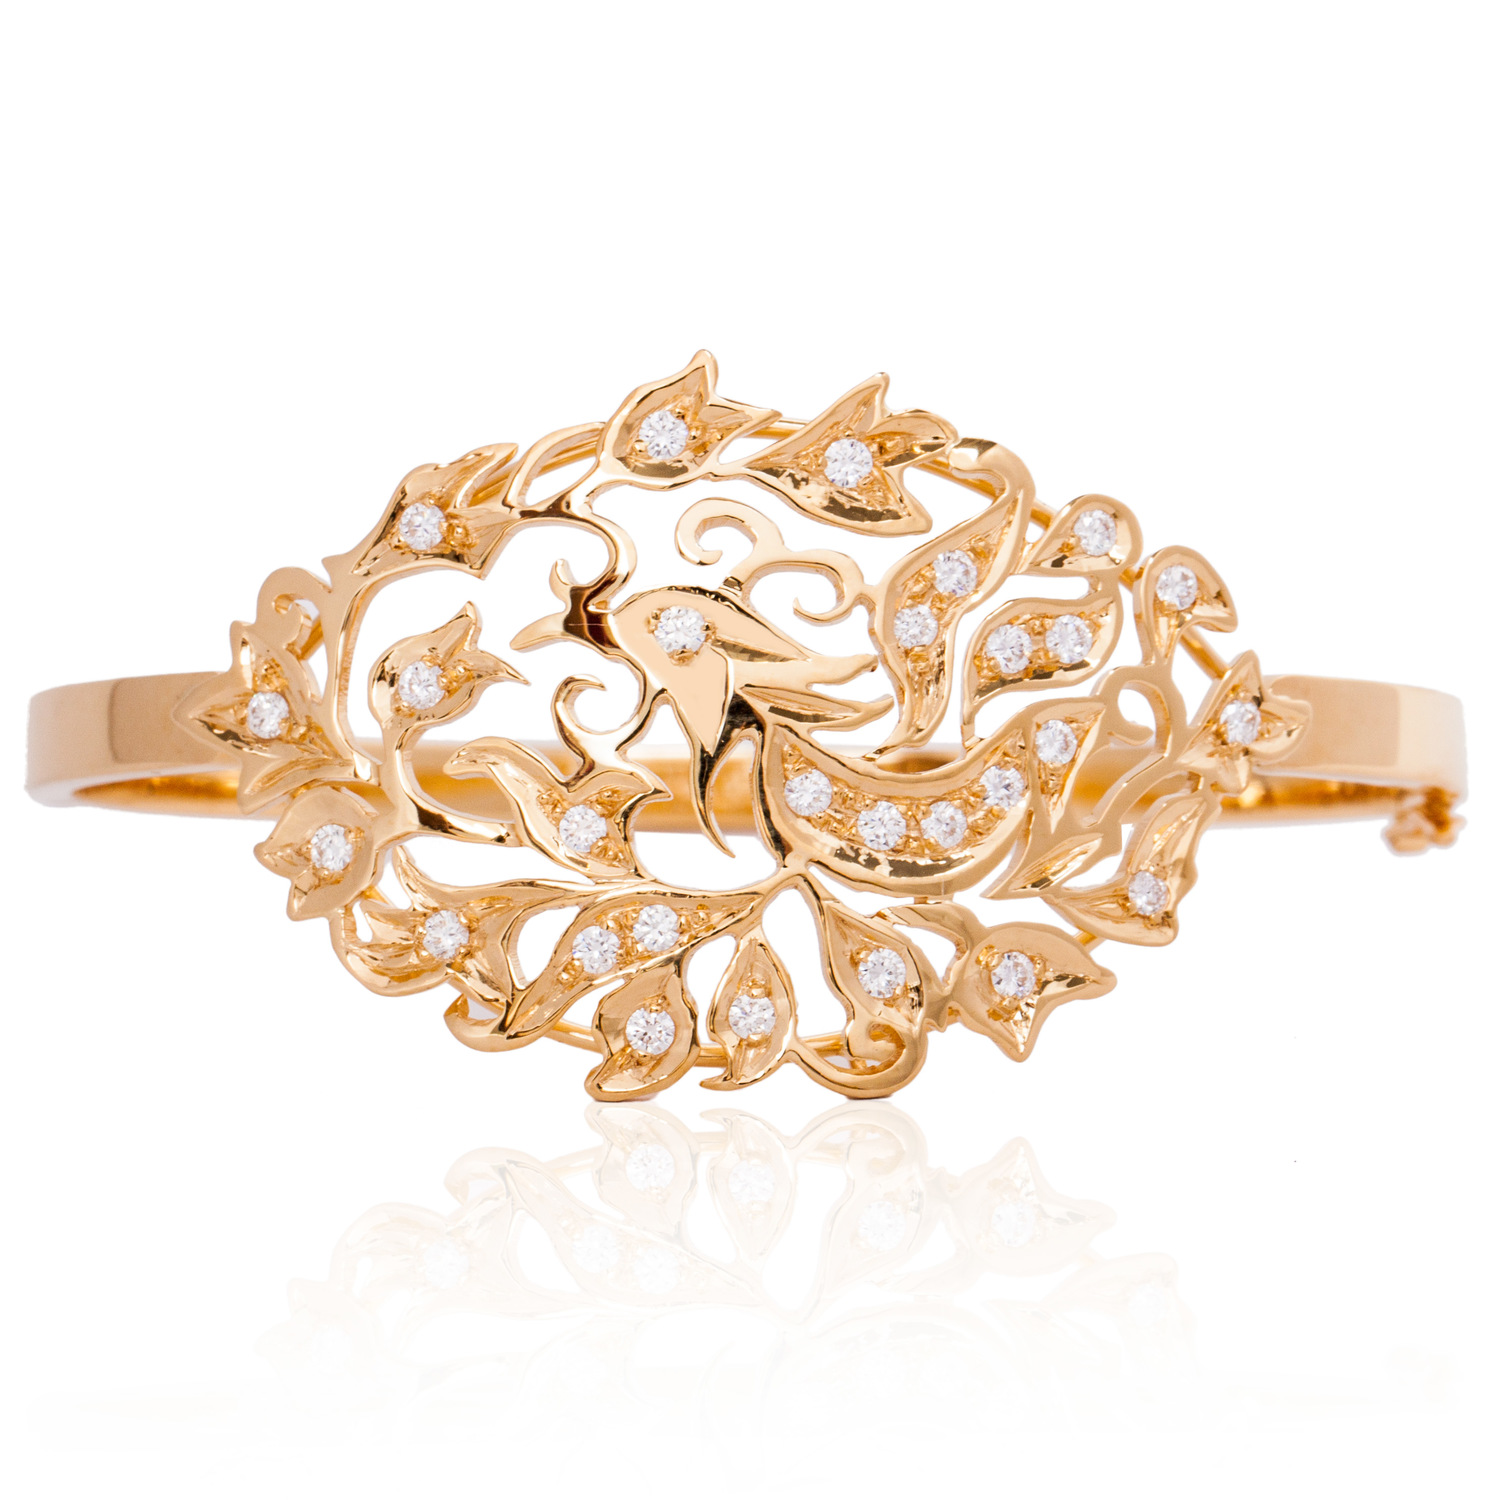 20-continental-jewels-manufacturers-bangle-cjb000020-18k-rose-gold-vvs1-diamonds-gold-leaves-bangle.jpg